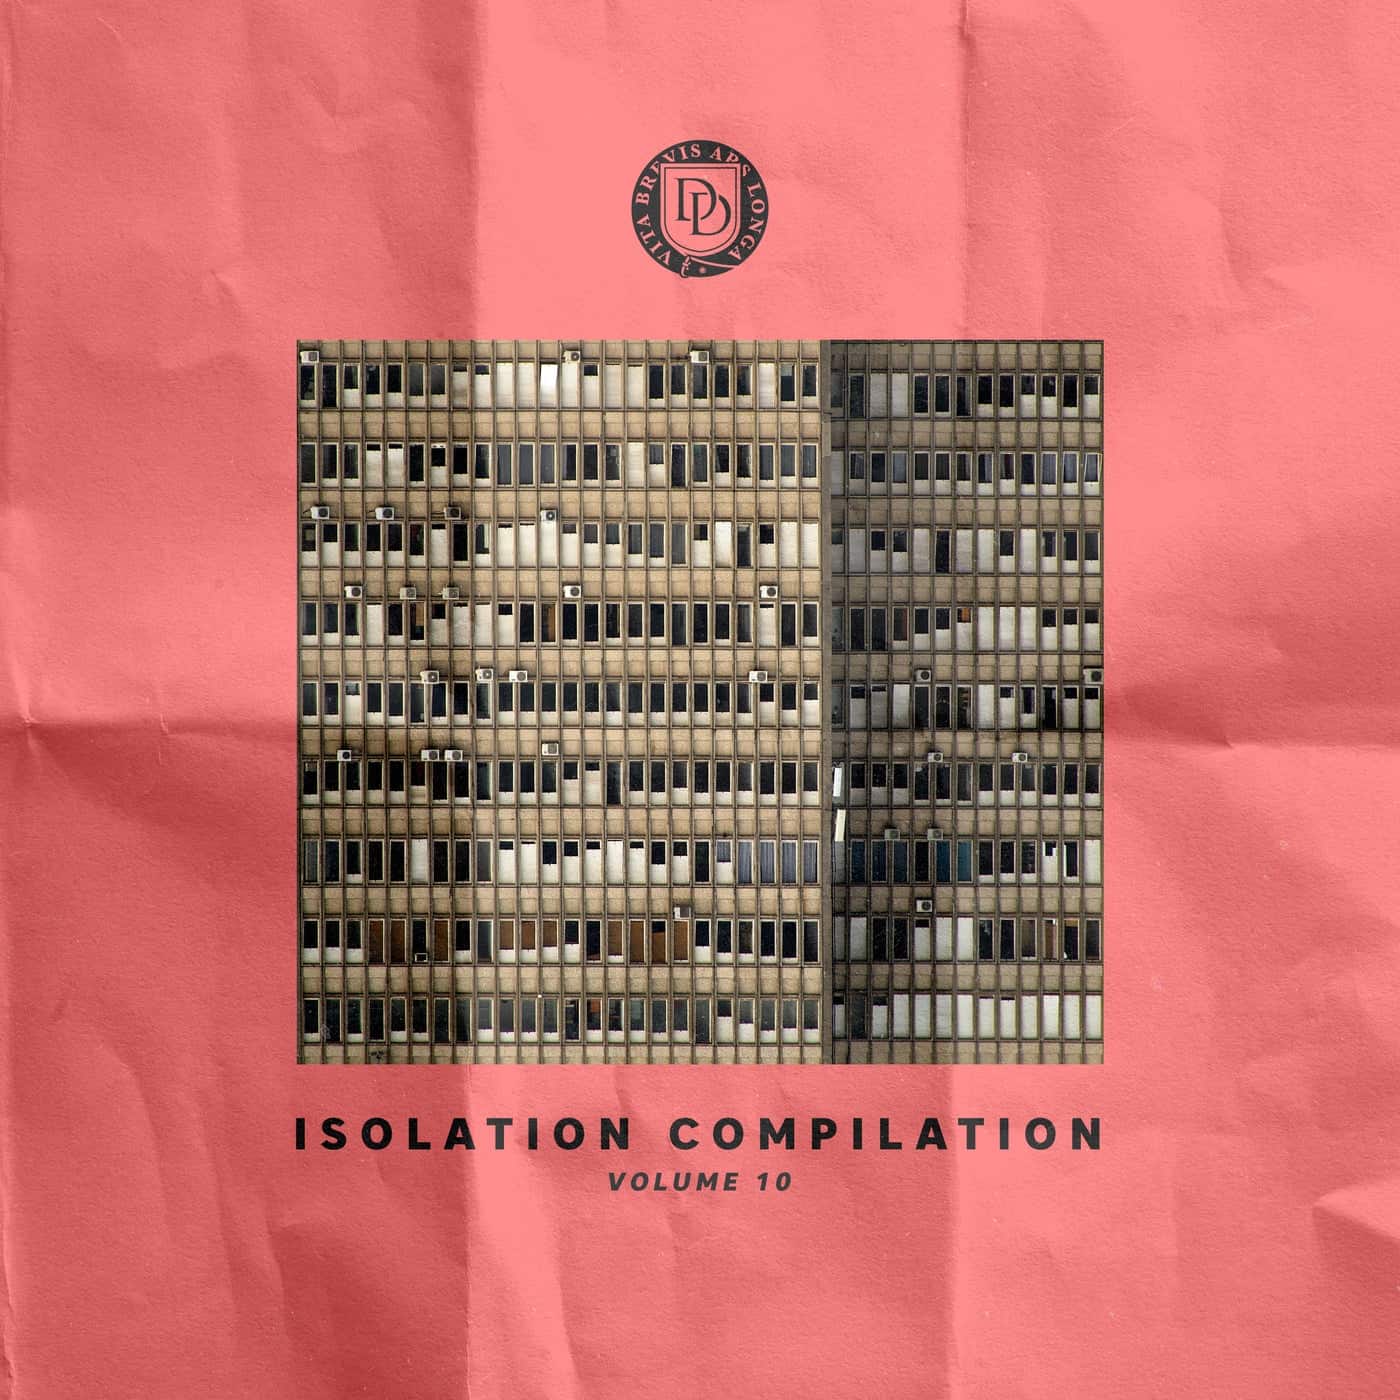 Download ISOLATION COMPILATION VOLUME 10 on Electrobuzz